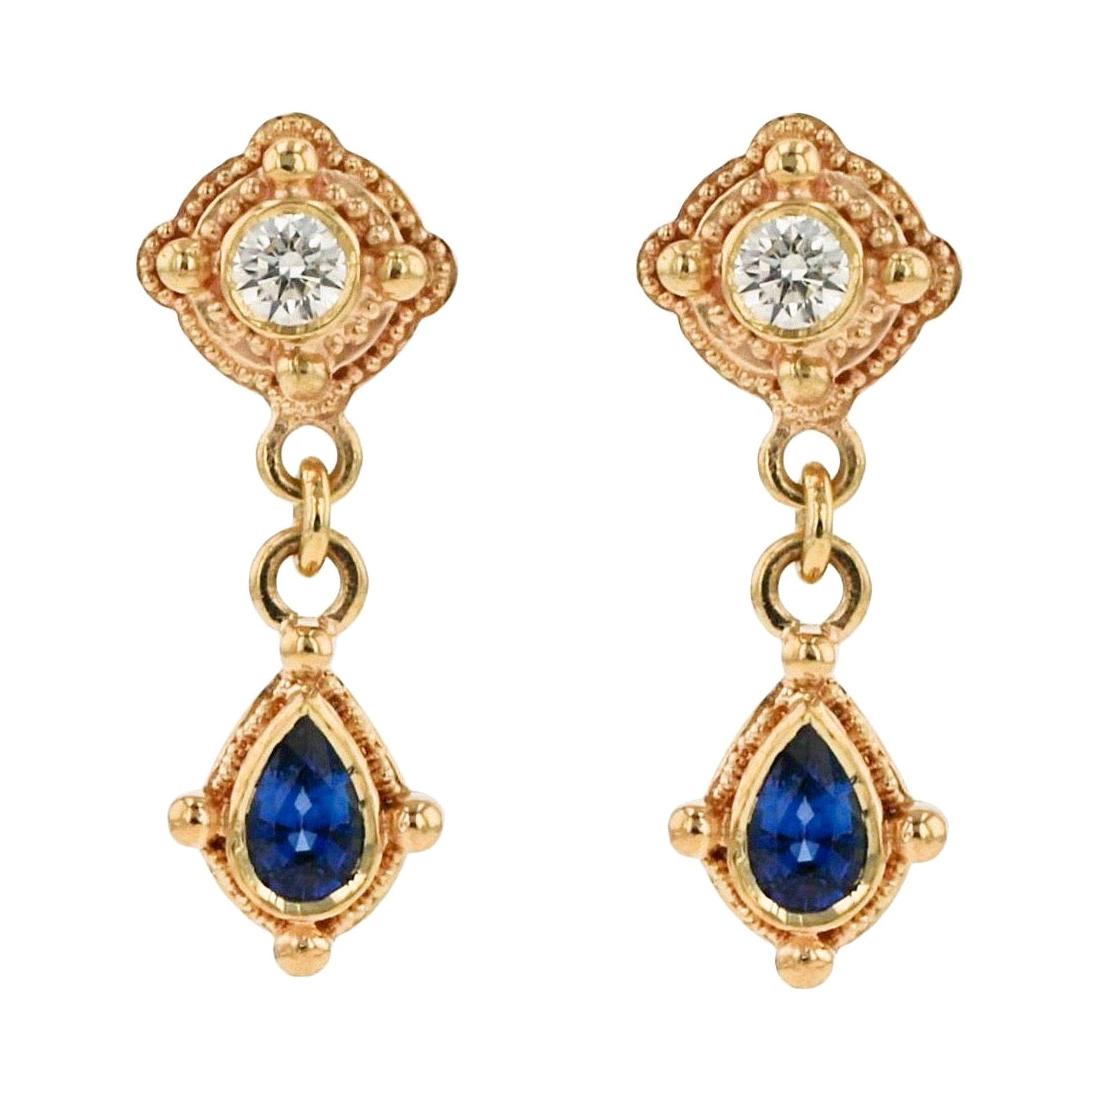 Kent Raible 18 Karat Gold, Diamond, Blue Sapphire Drop Earrings with Granulation